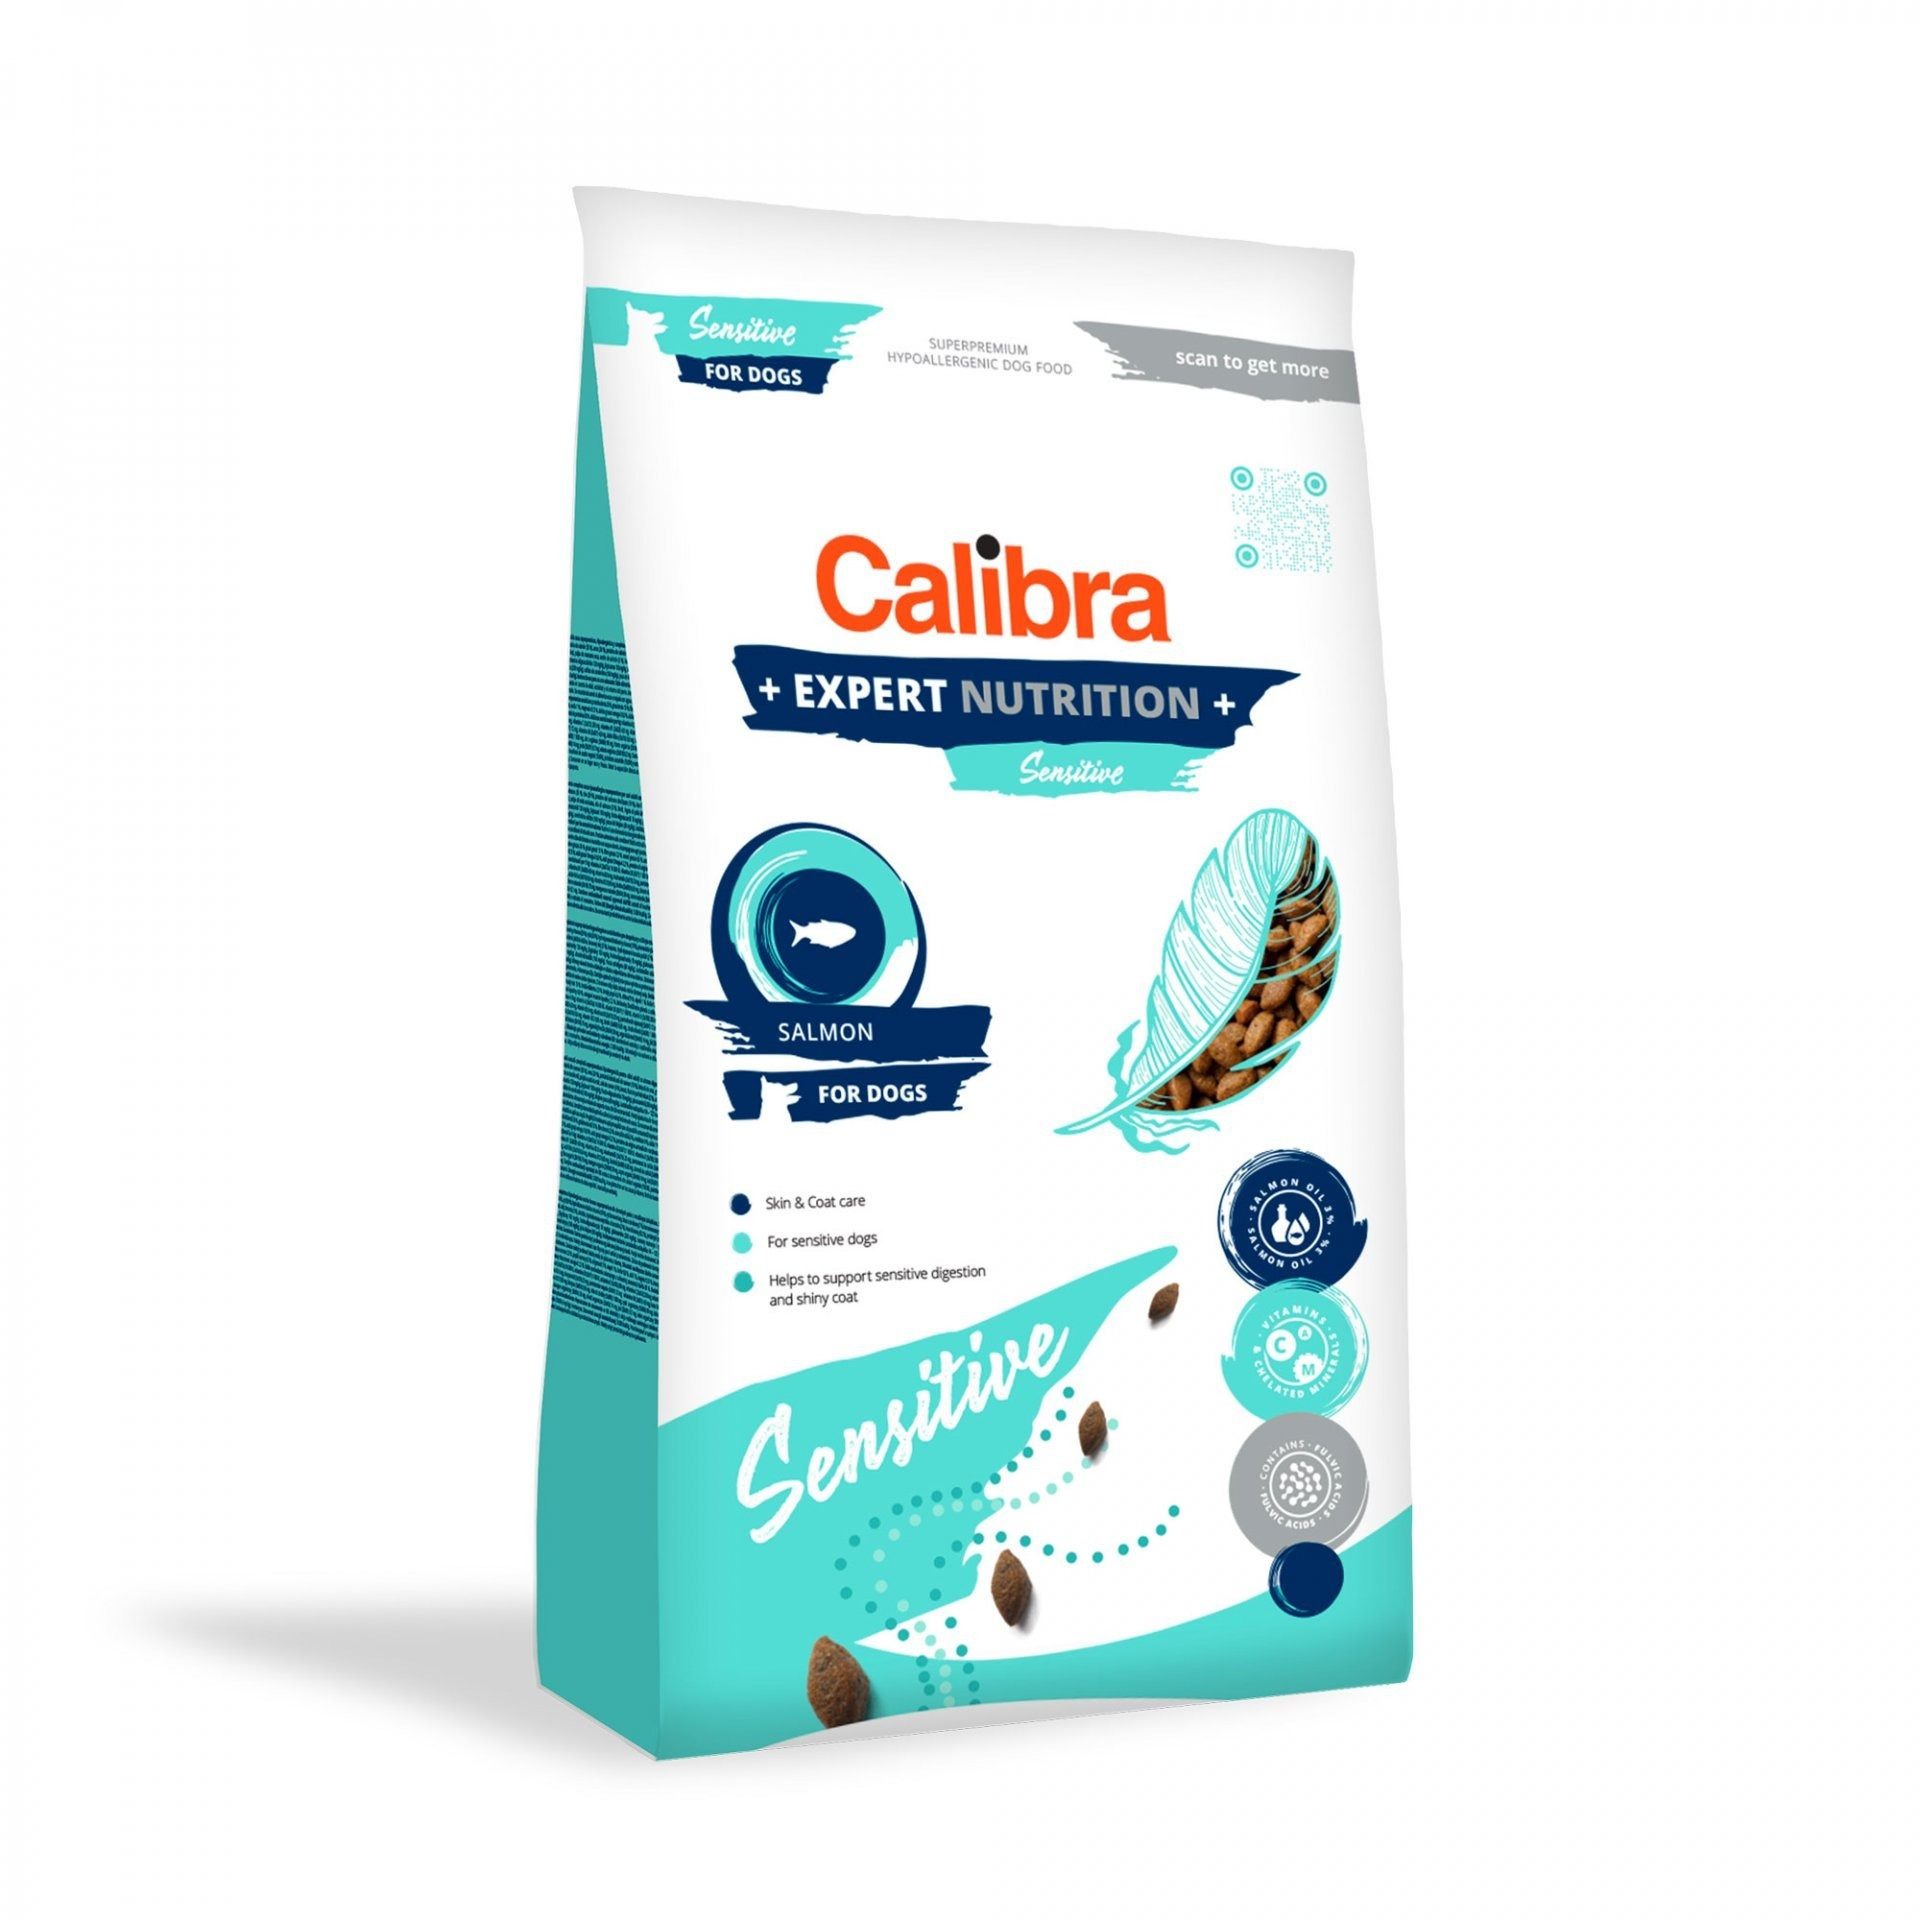 Calibra Dog Food Expert Nutrition Sensitive Salmon - 2kg